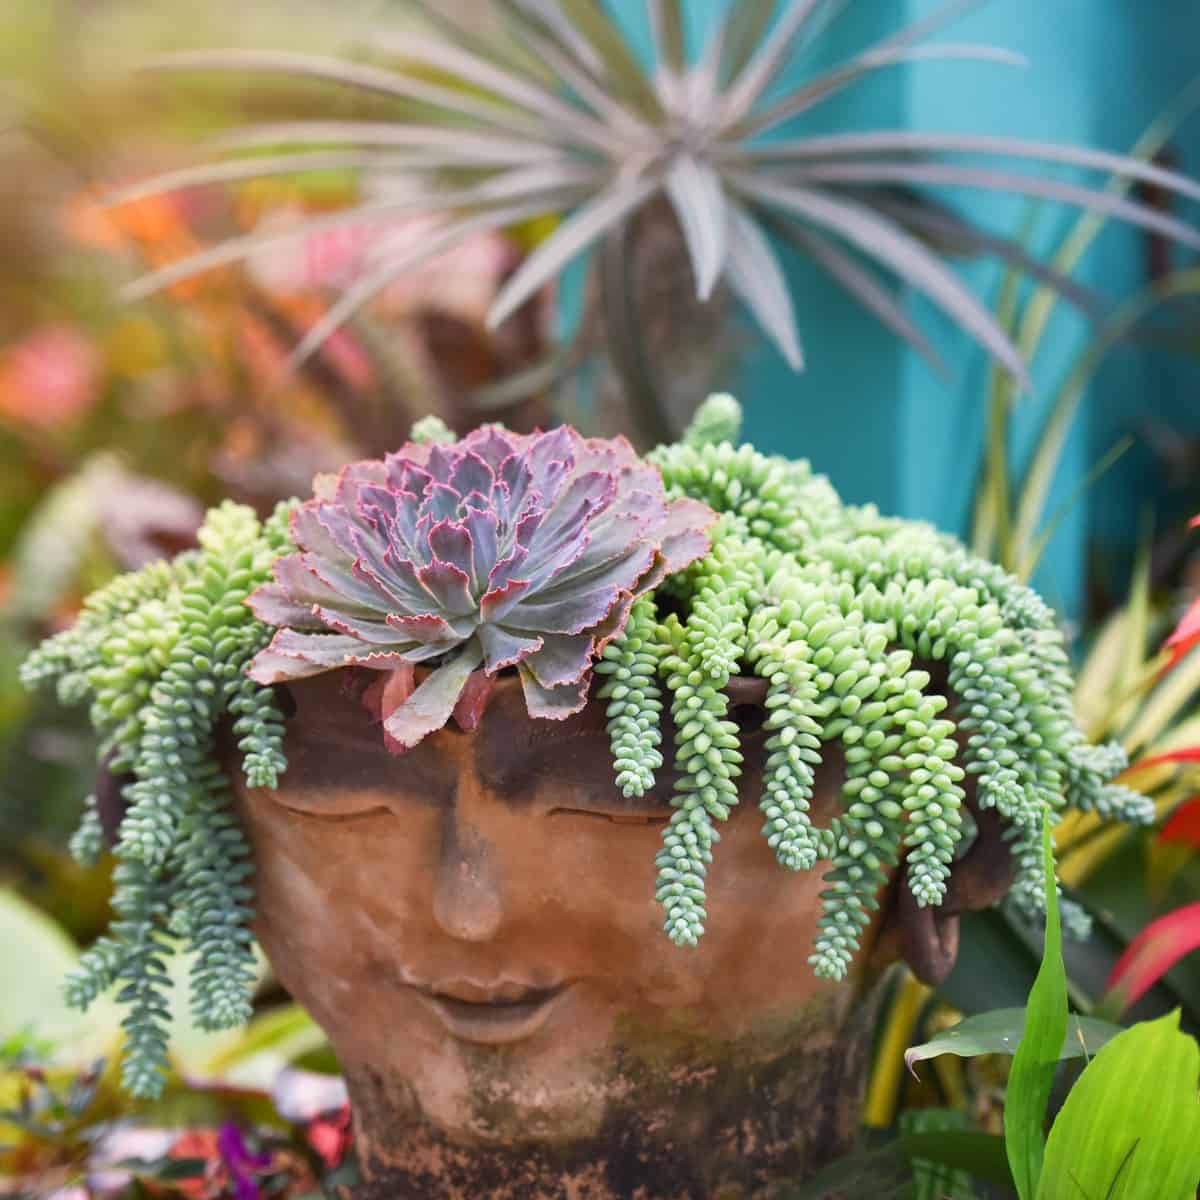 Fun head-shaped succulent planter growing beautiful succulents.